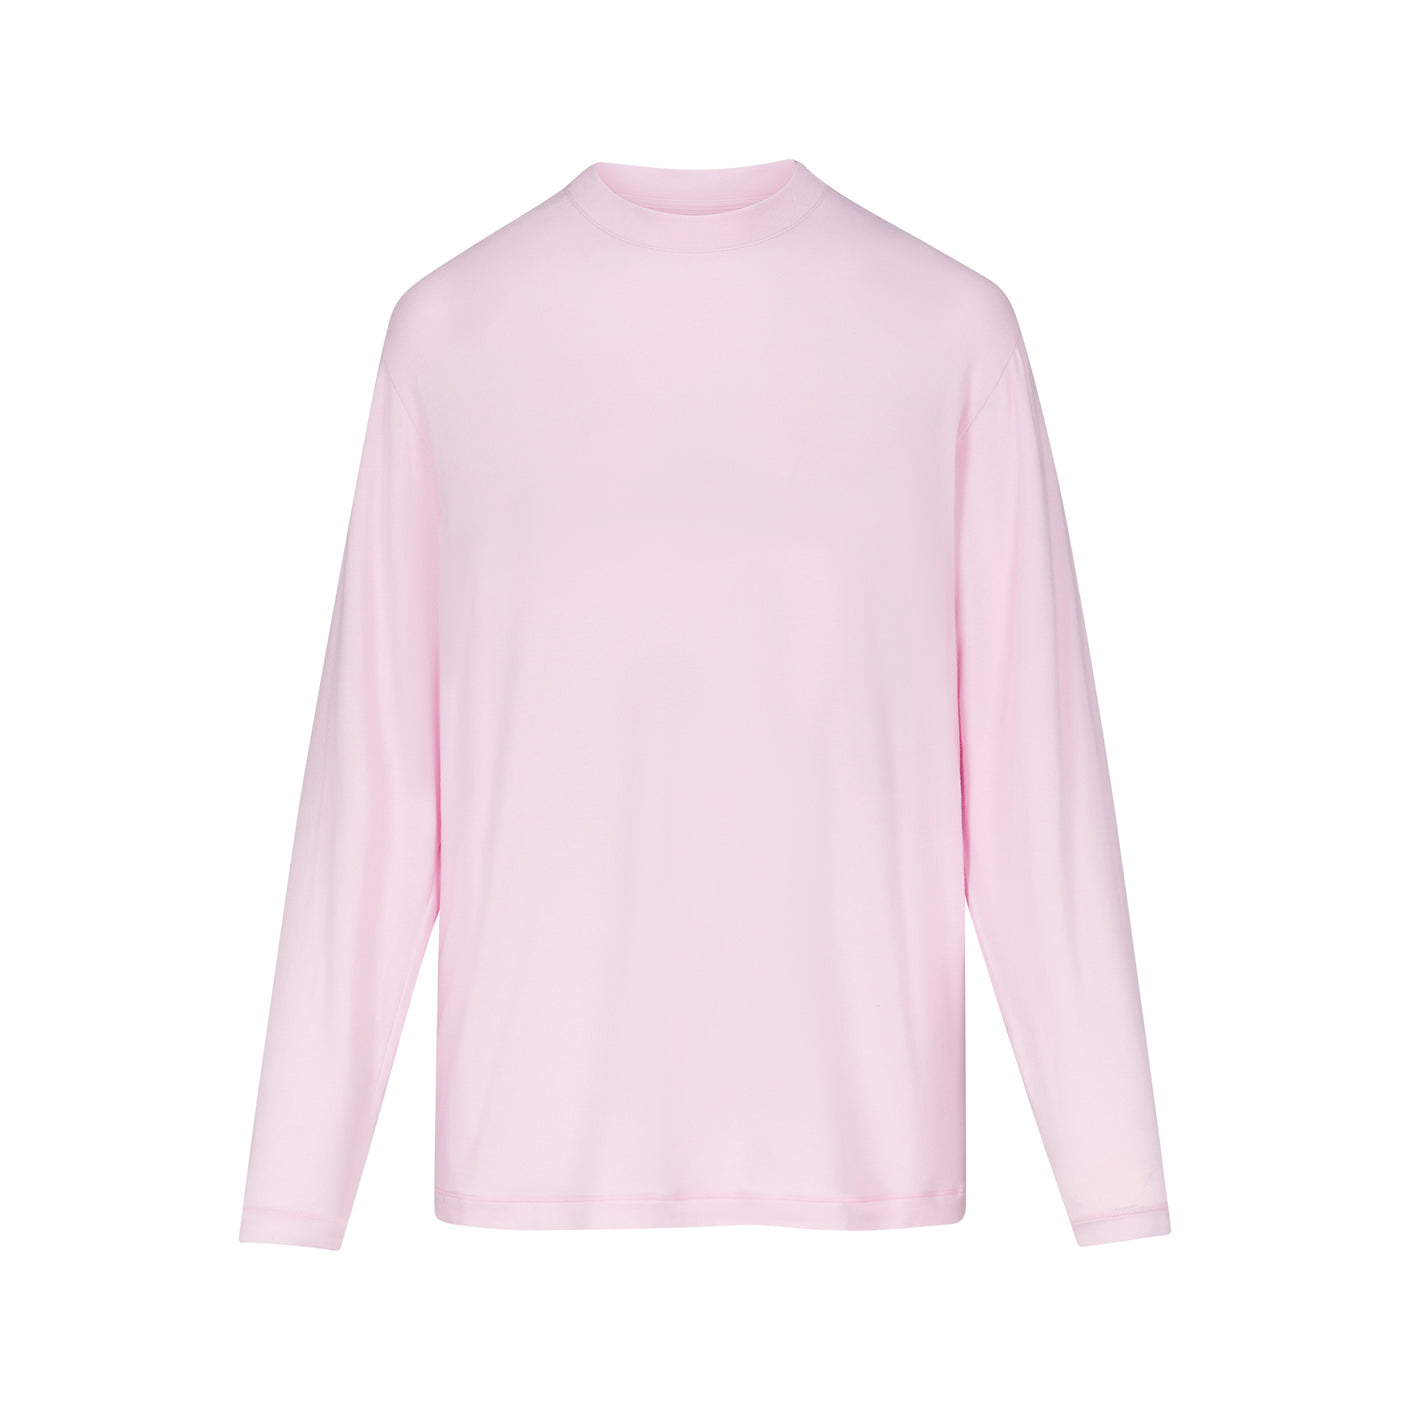 Skims Scoop Long Sleeve T-shirt in Pink